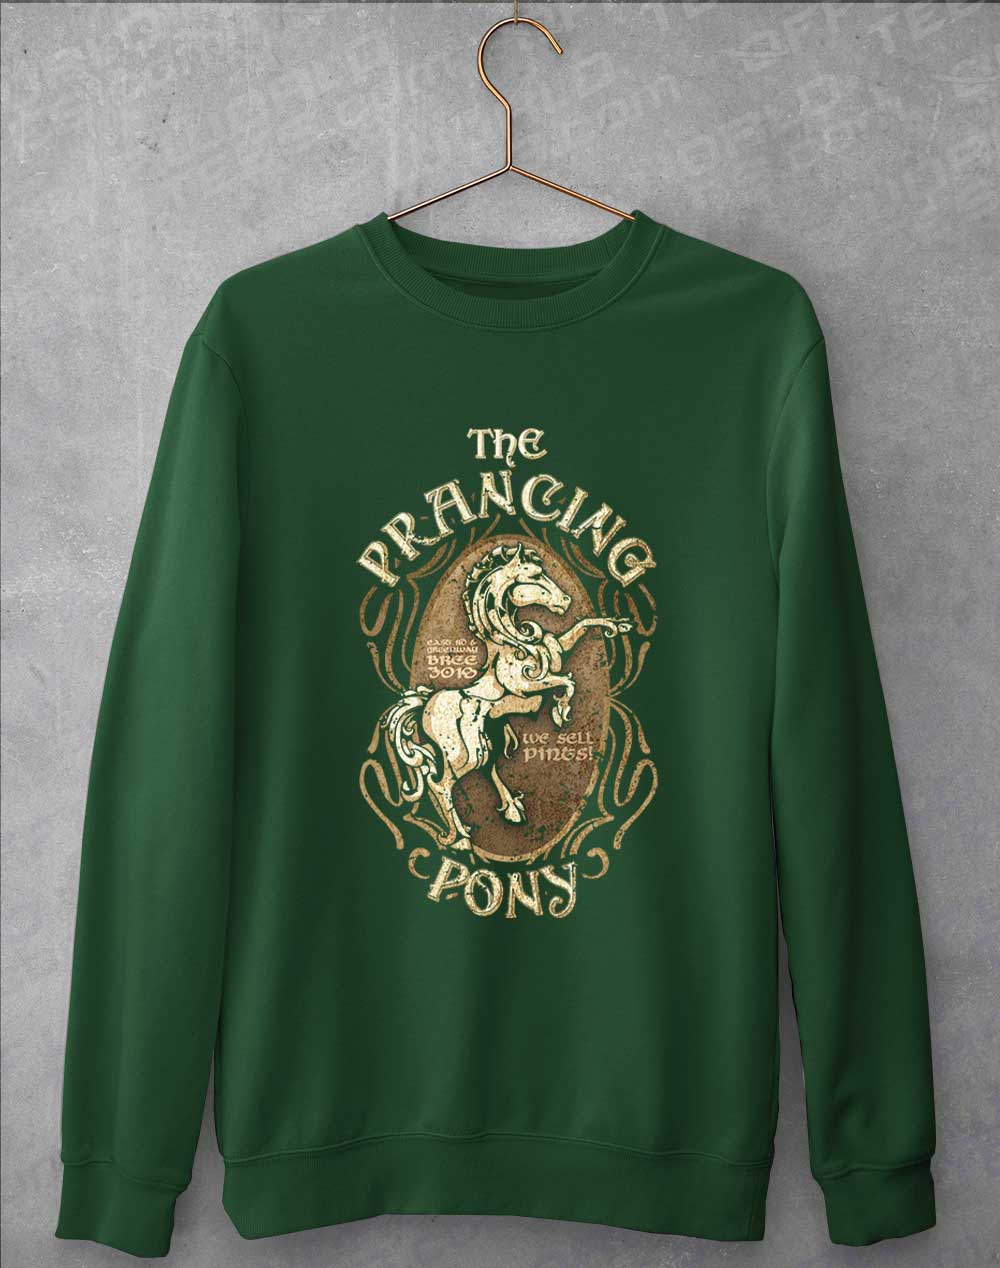 Bottle Green - The Prancing Pony Sweatshirt